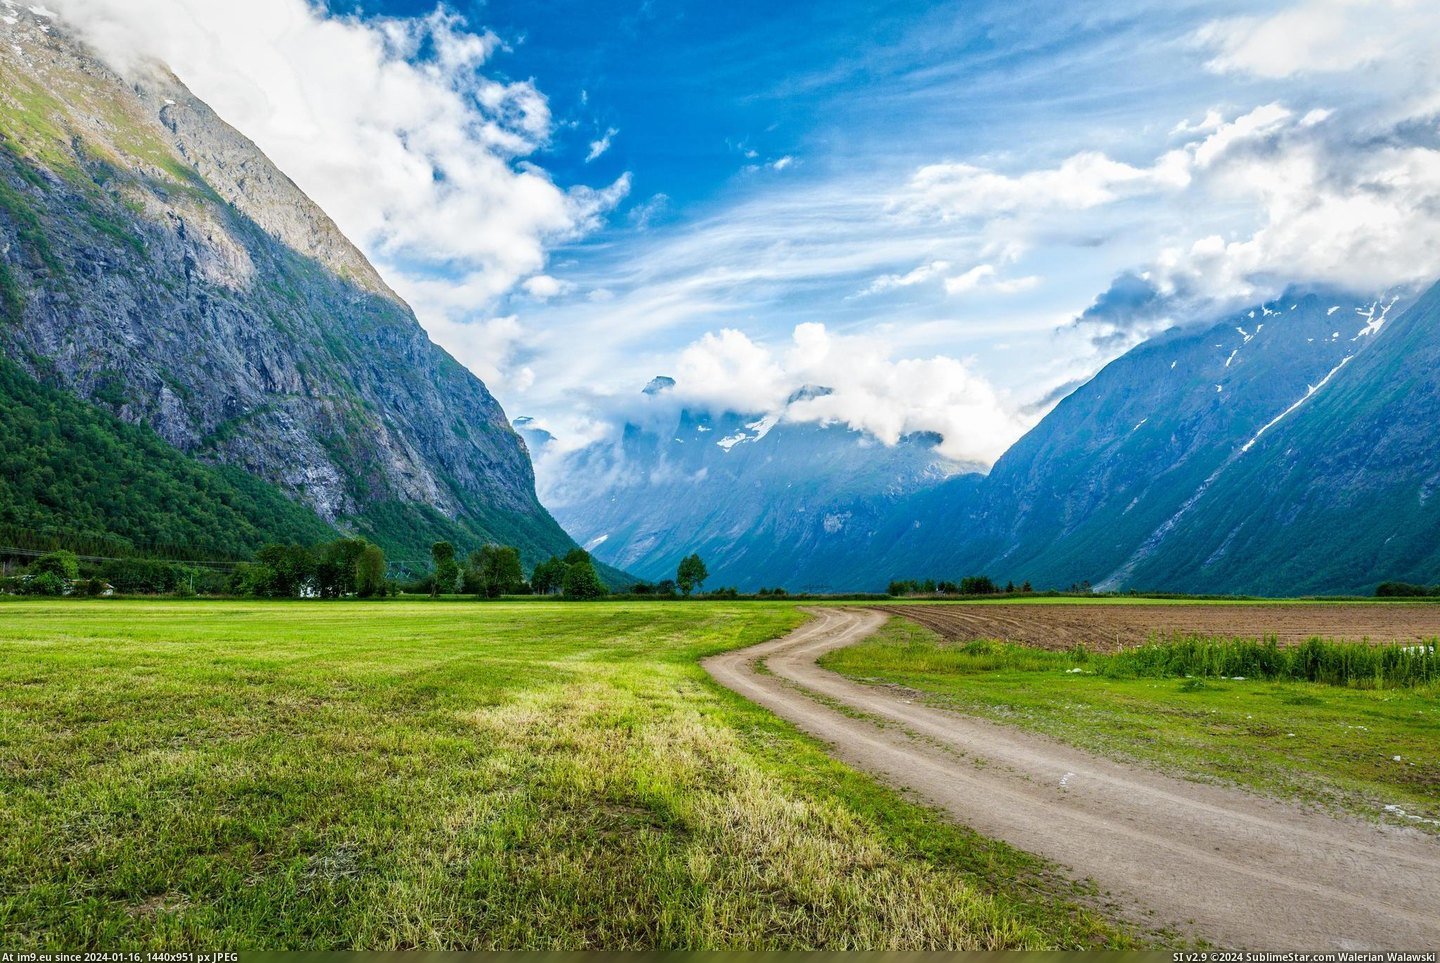 #Road #Simple #Norway [Pics] A simple road in Norway Pic. (Изображение из альбом My r/PICS favs))